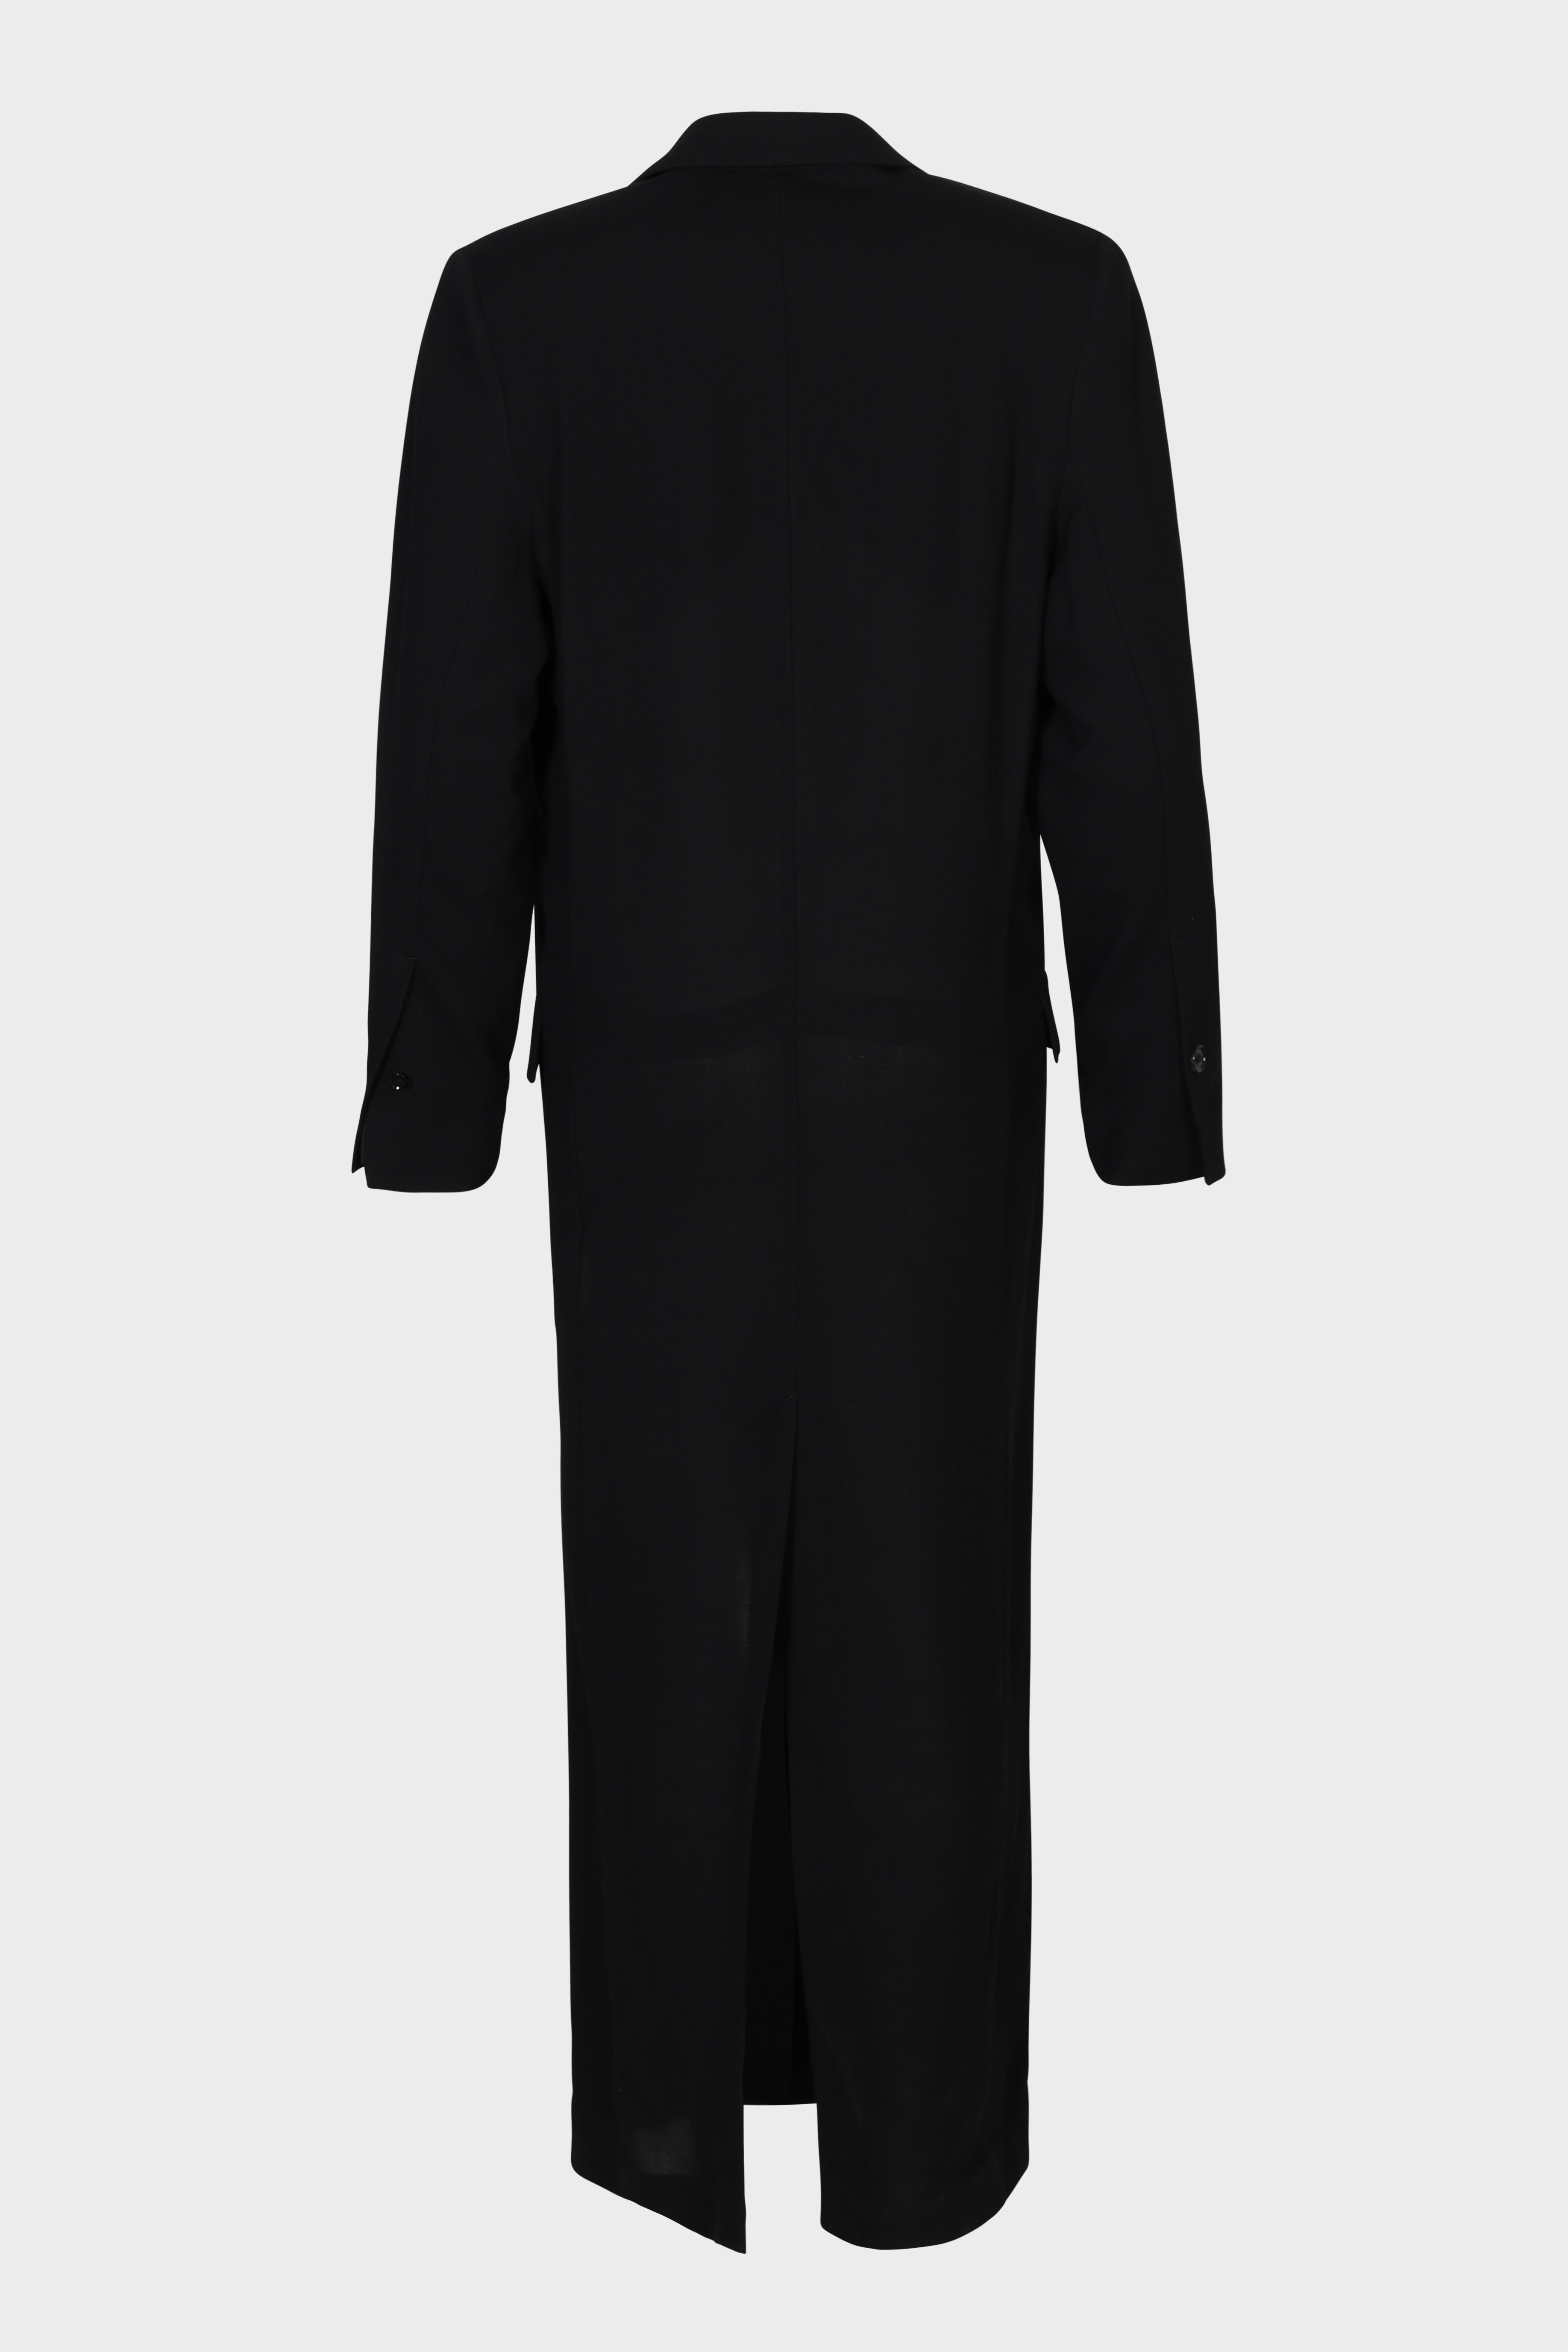 AMI PARIS Gabardine Coat Dress in Black FR40 / DE38